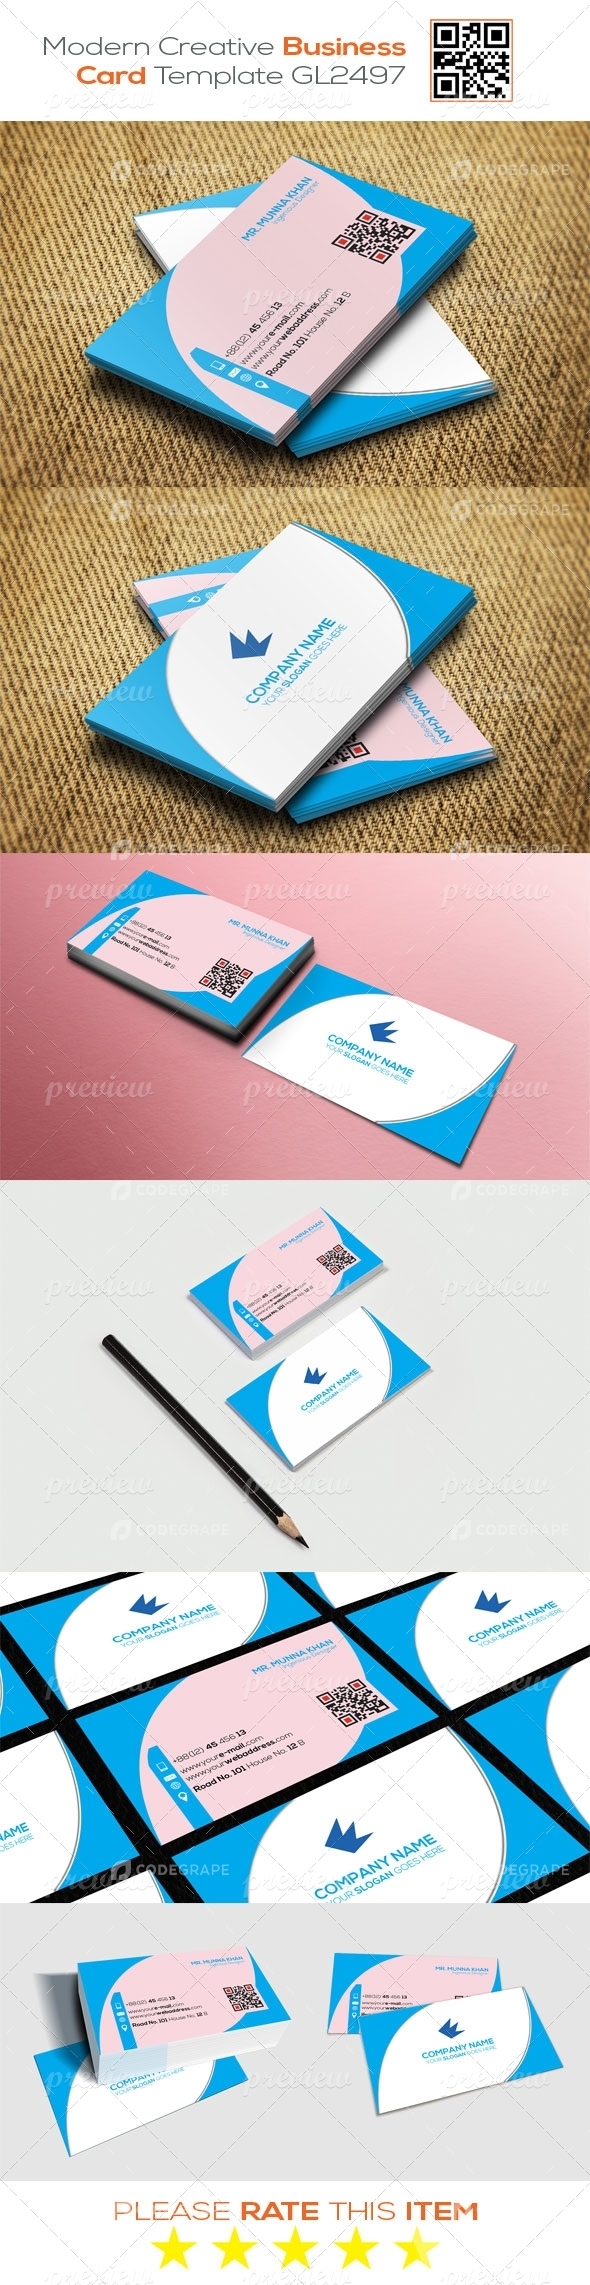 Modern Creative Business Card Template GL2497